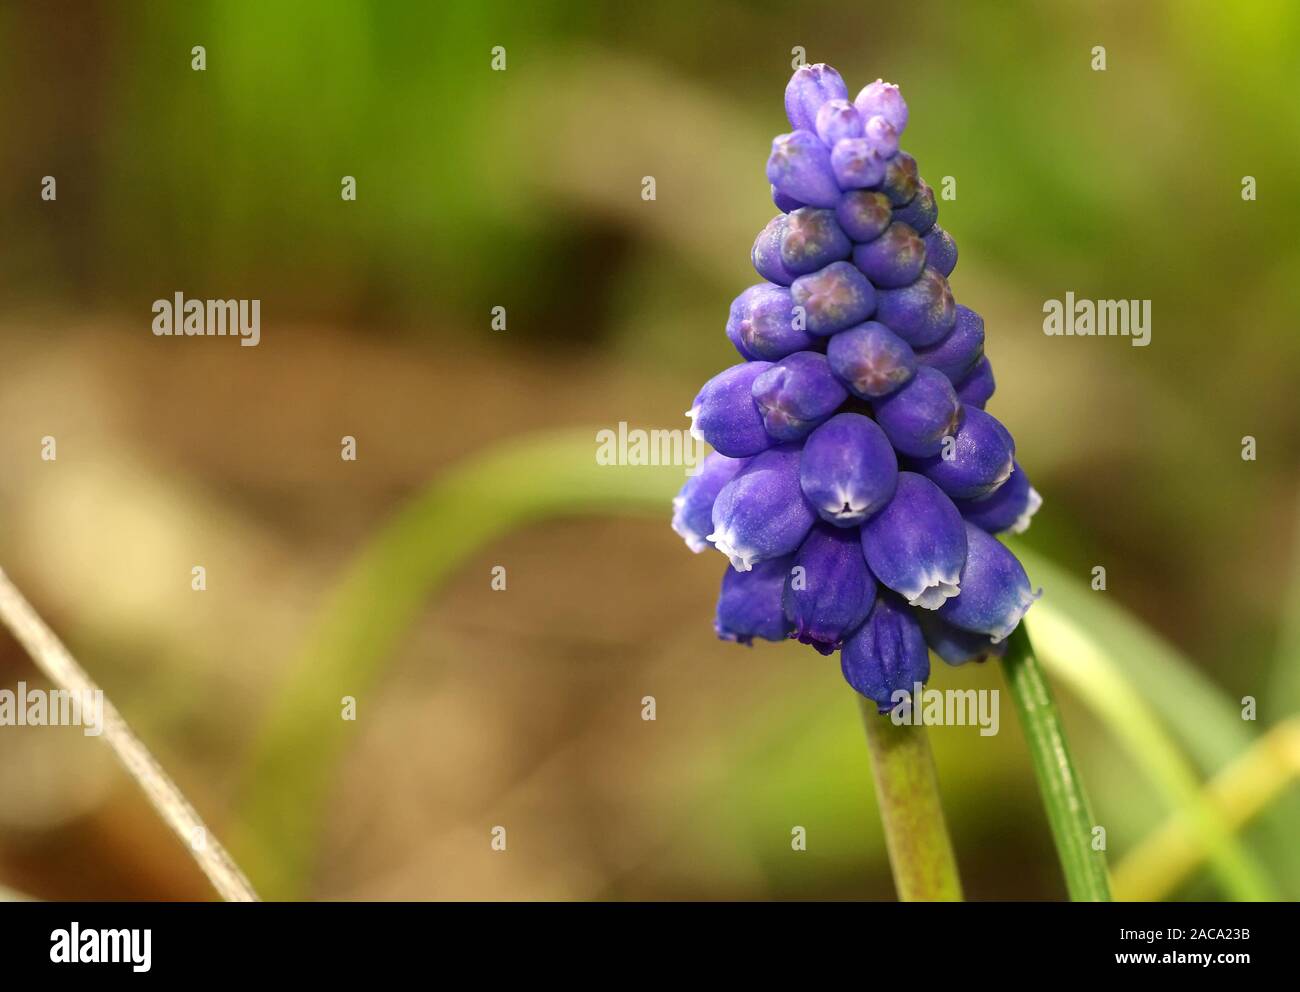 Grape hyacinth in the garden Stock Photo